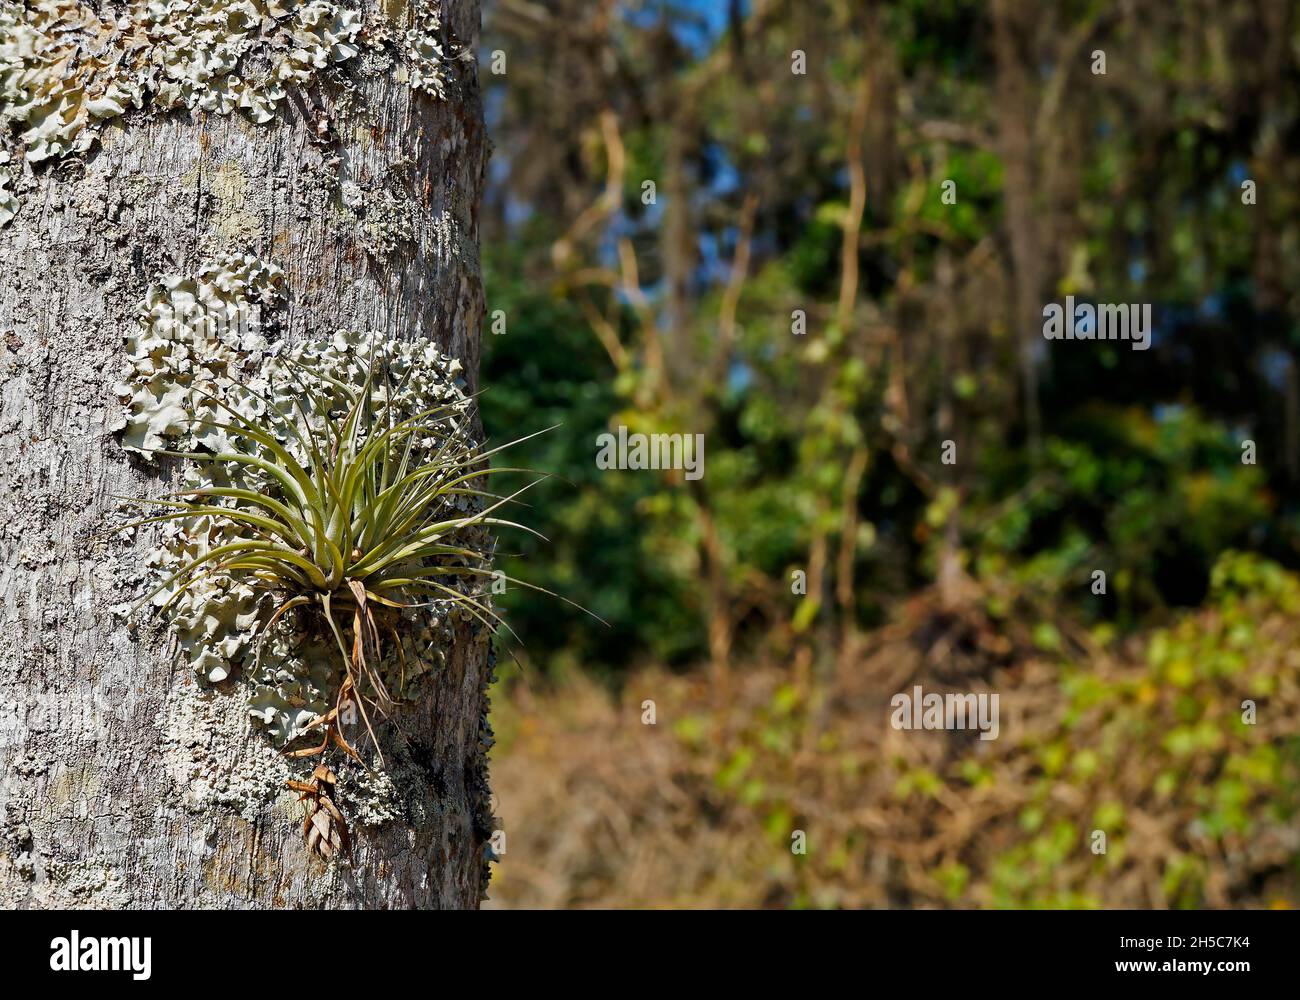 Epiphytic plant (Tillandsia stricta) on tree trunk Stock Photo